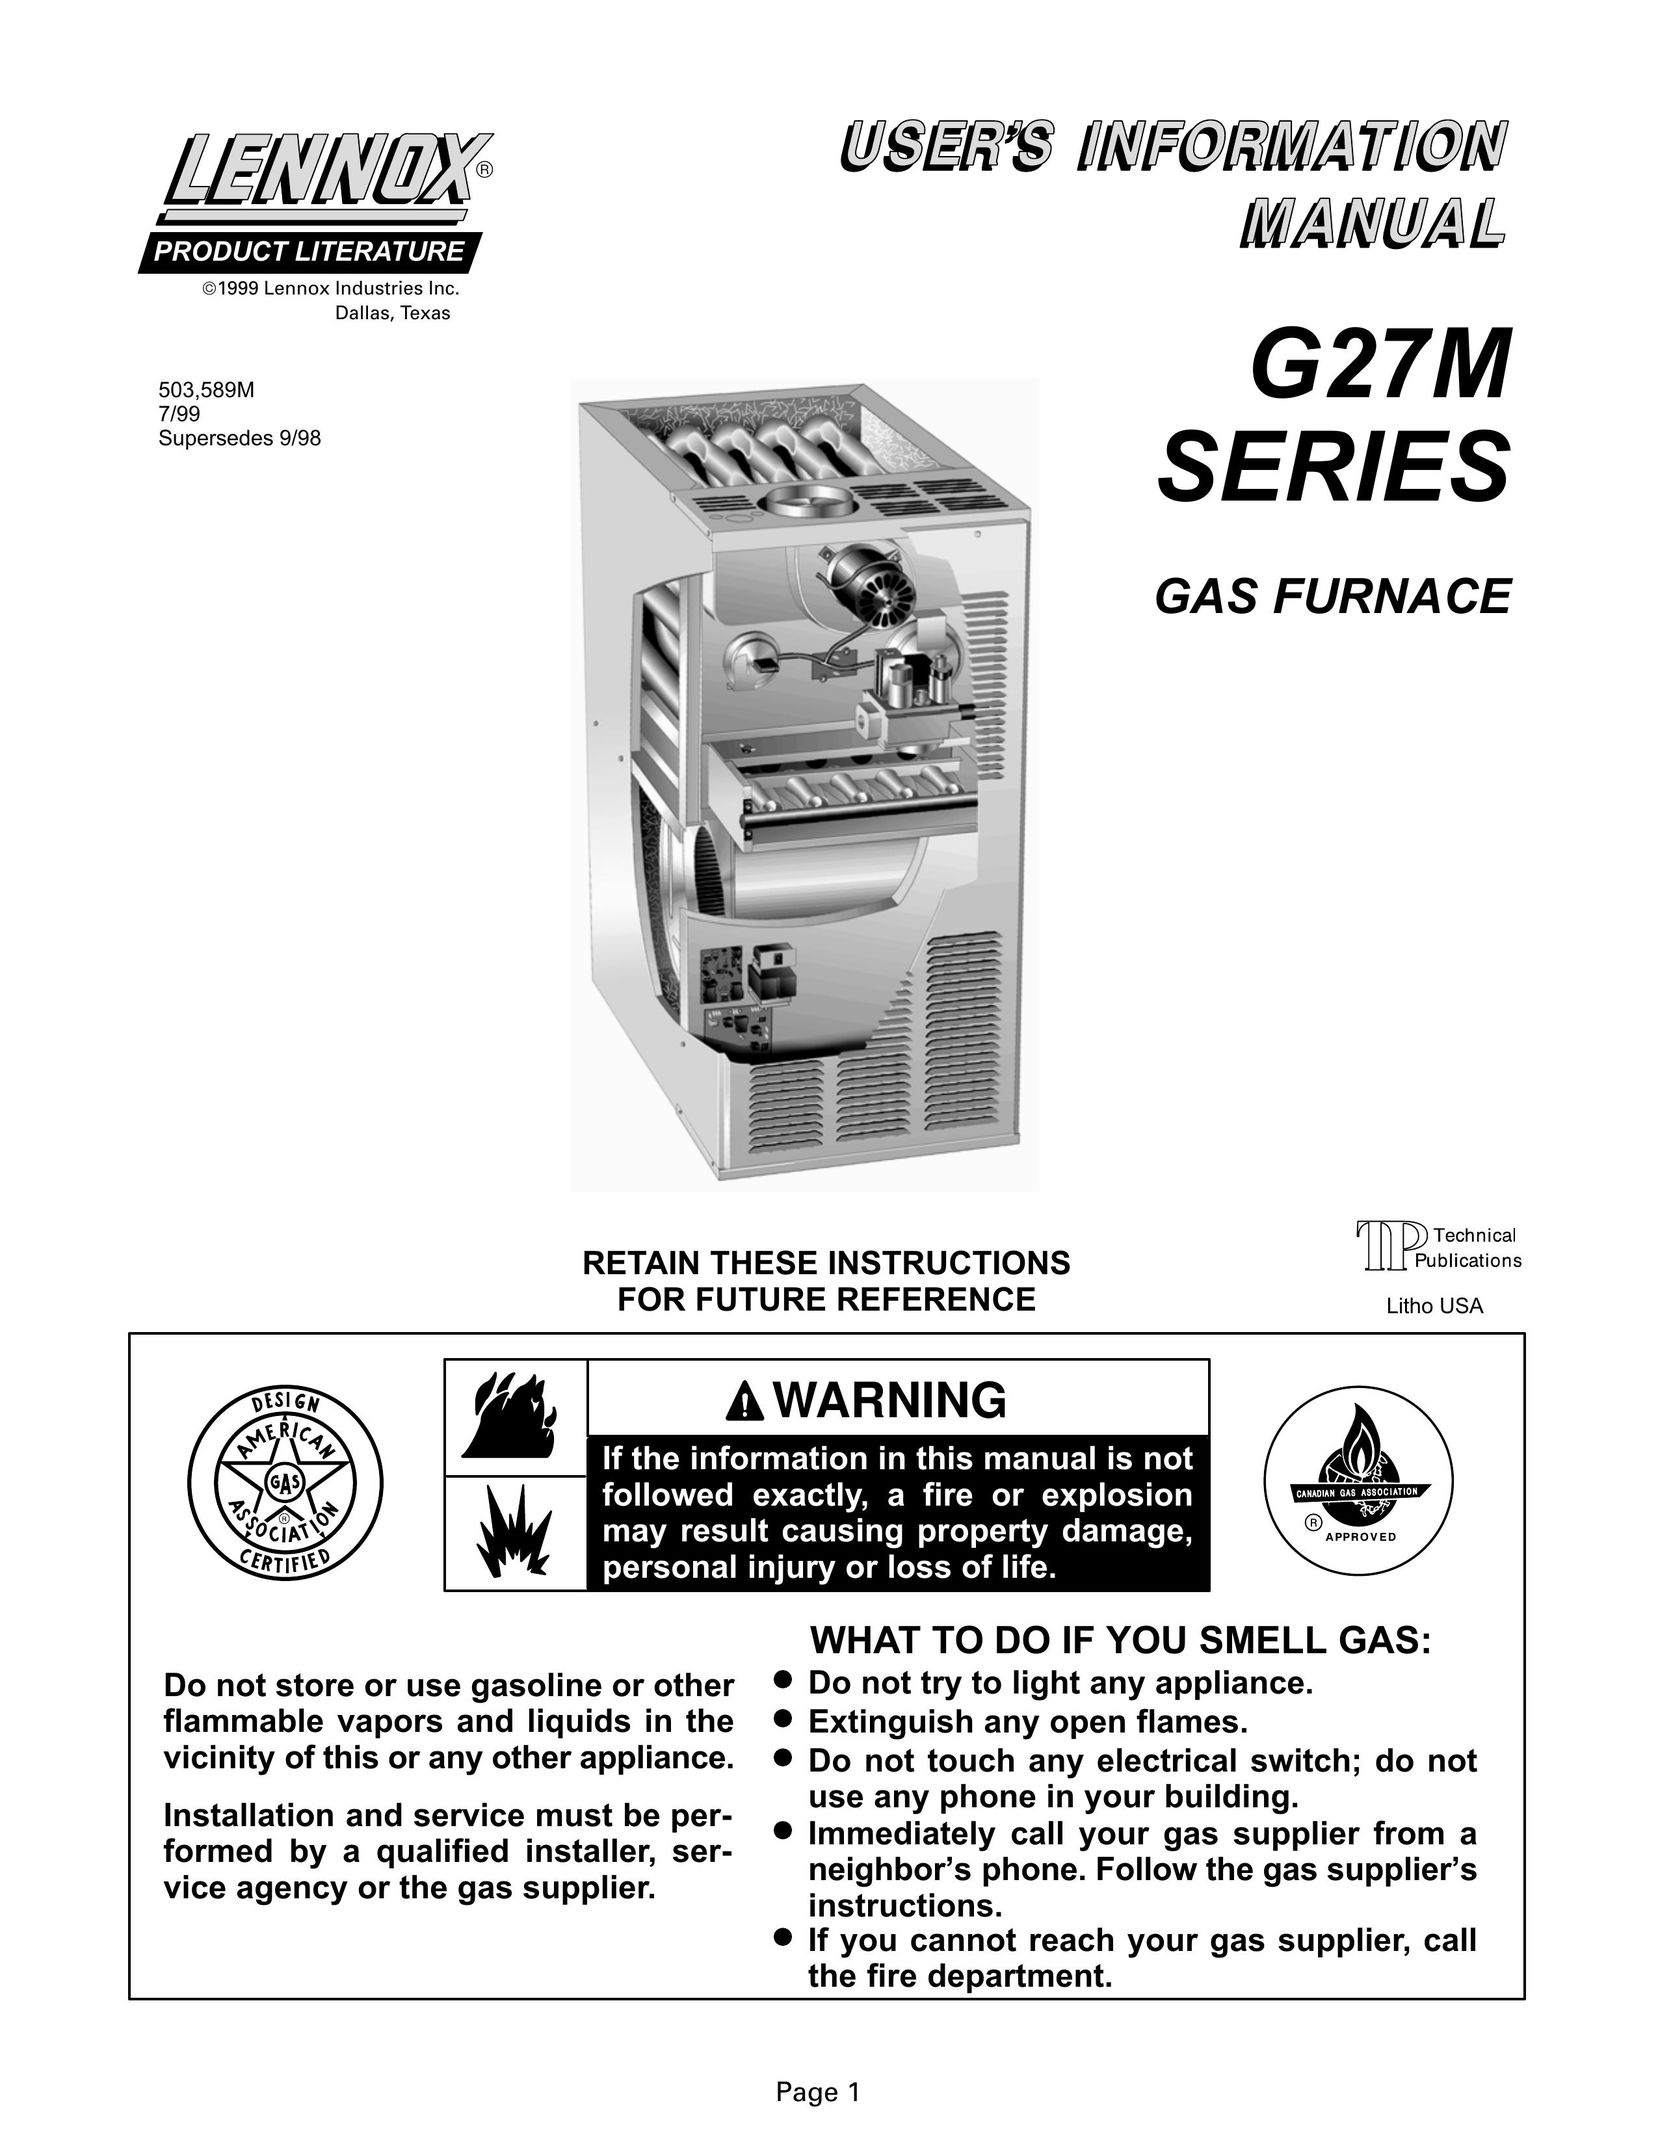 Lennox International Inc. G27M Furnace User Manual